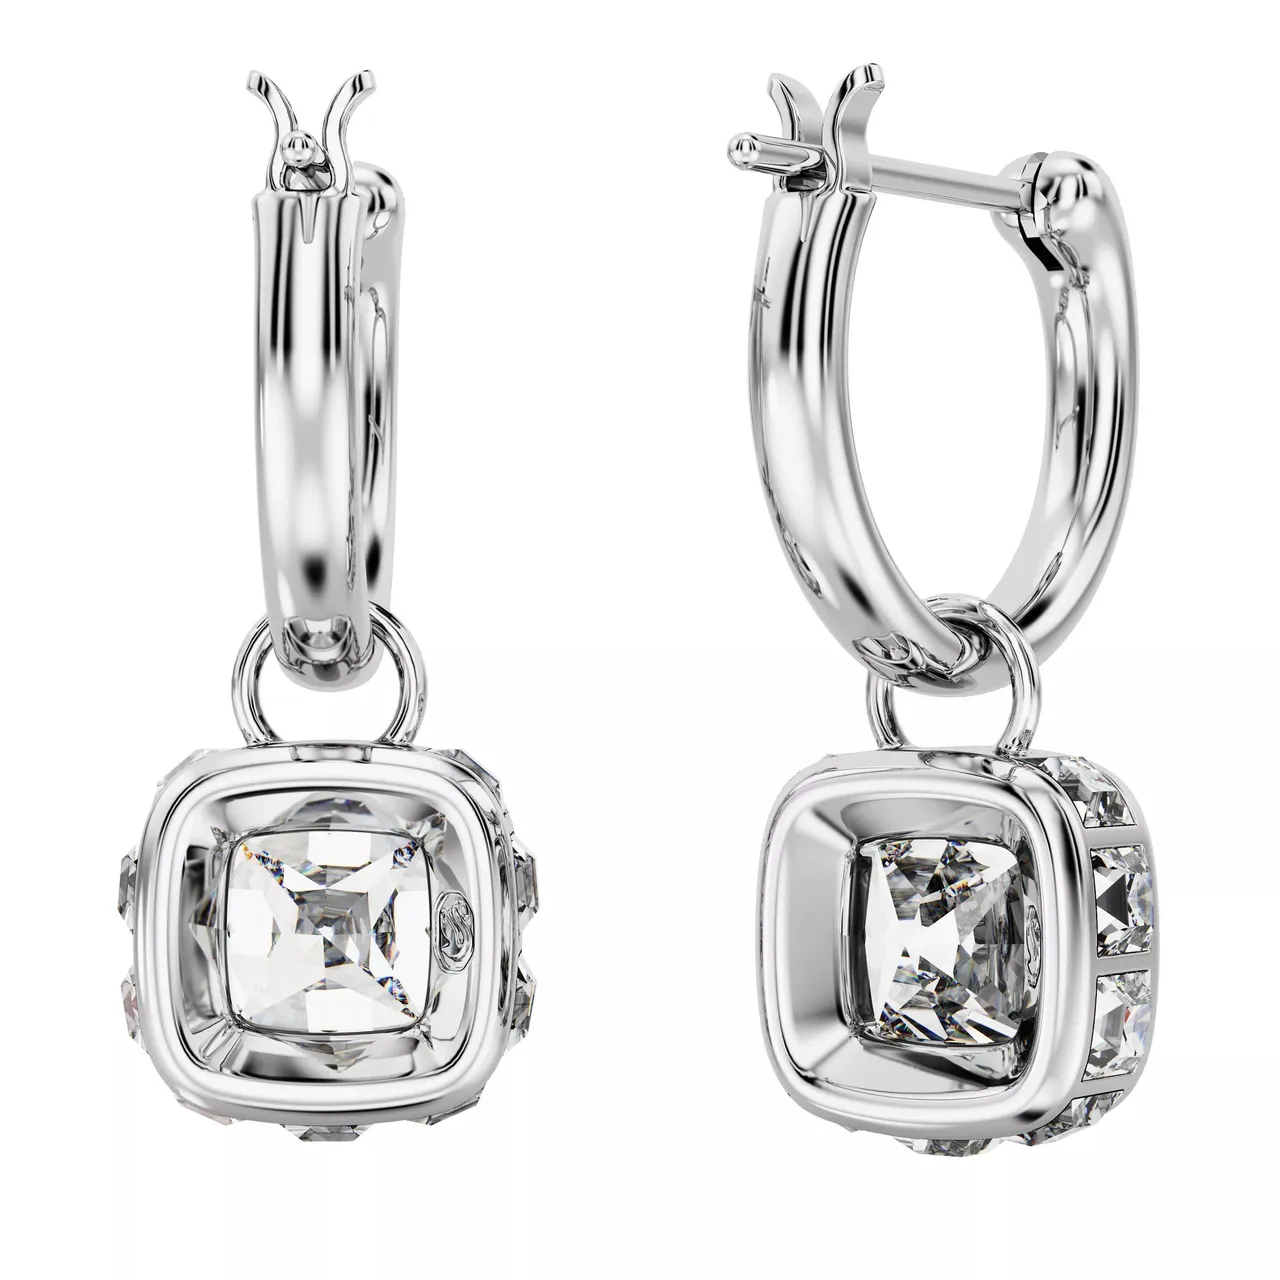 Swarovski Earrings - Stilla drop earrings, Square cut, Rhodium plated - white - Earrings for ladies